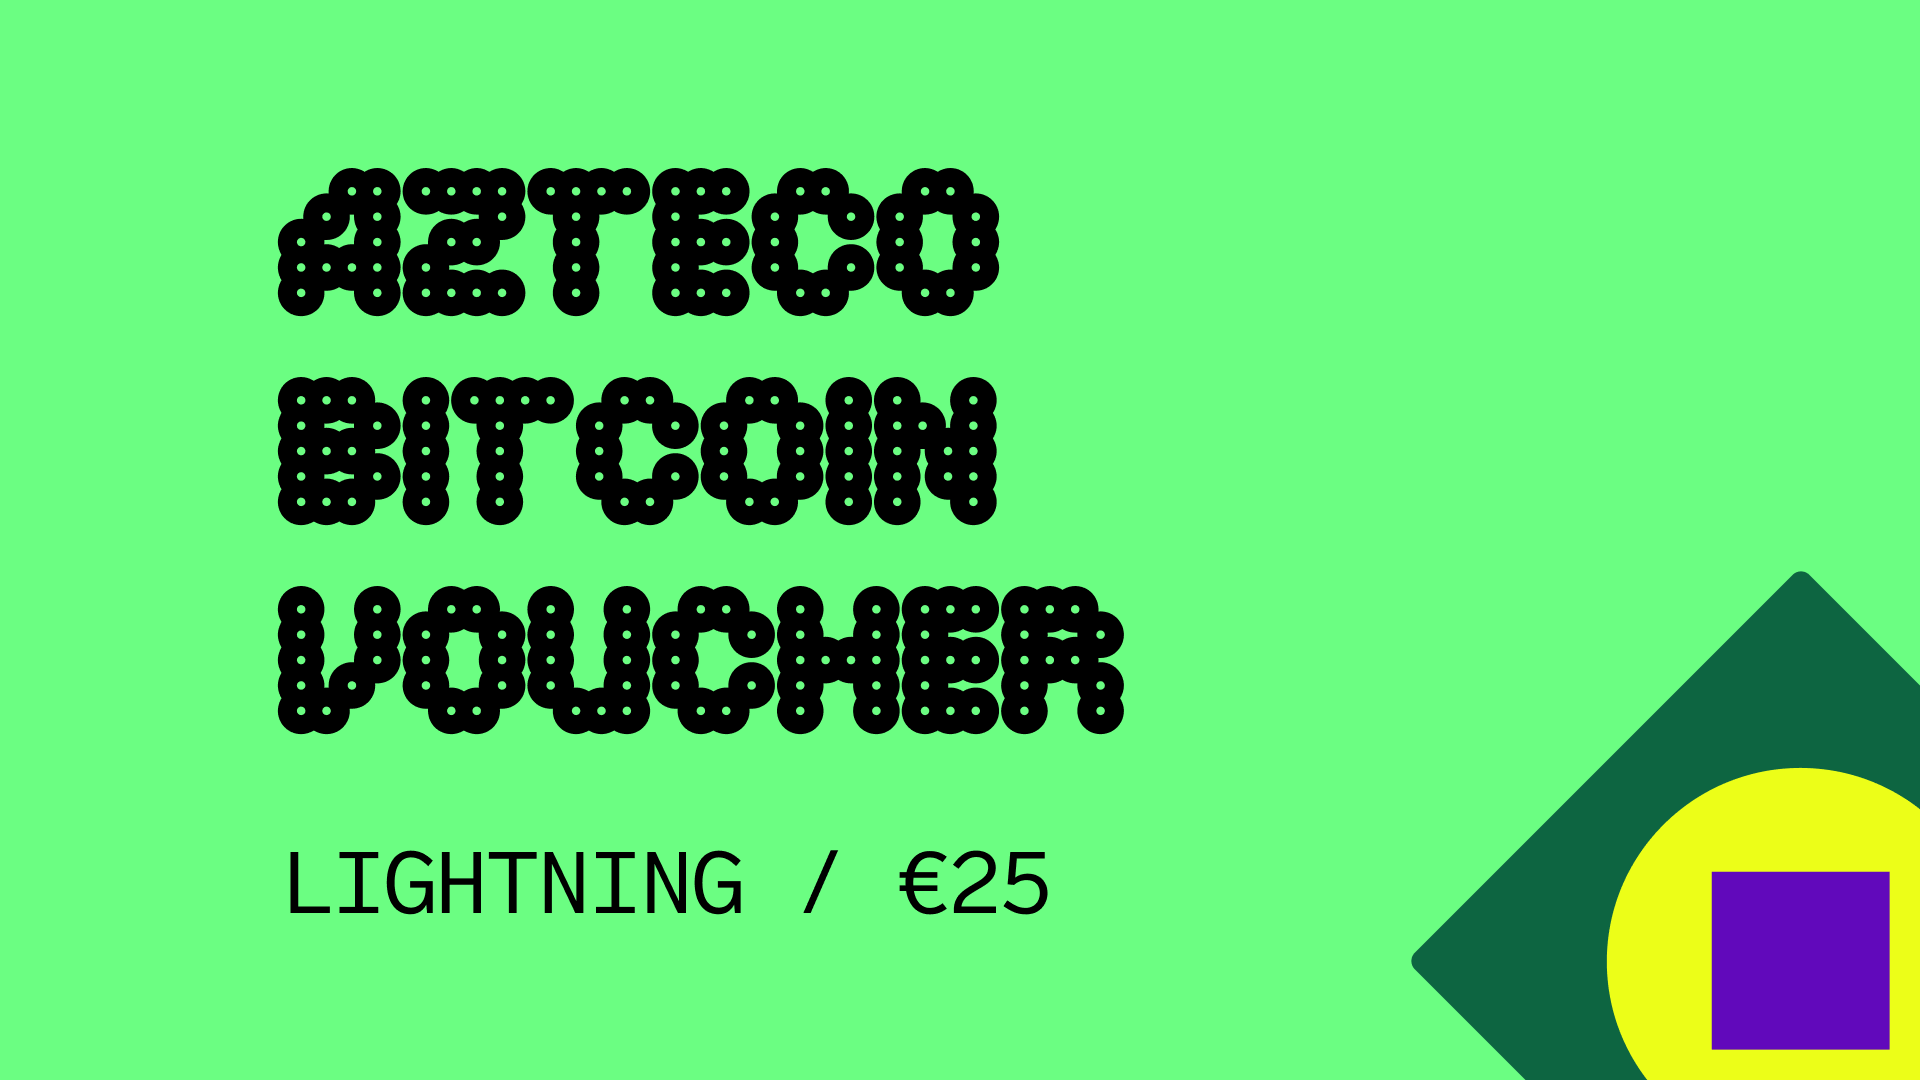 Azteco Bitcoin Lighting €25 Voucher 28.25 usd